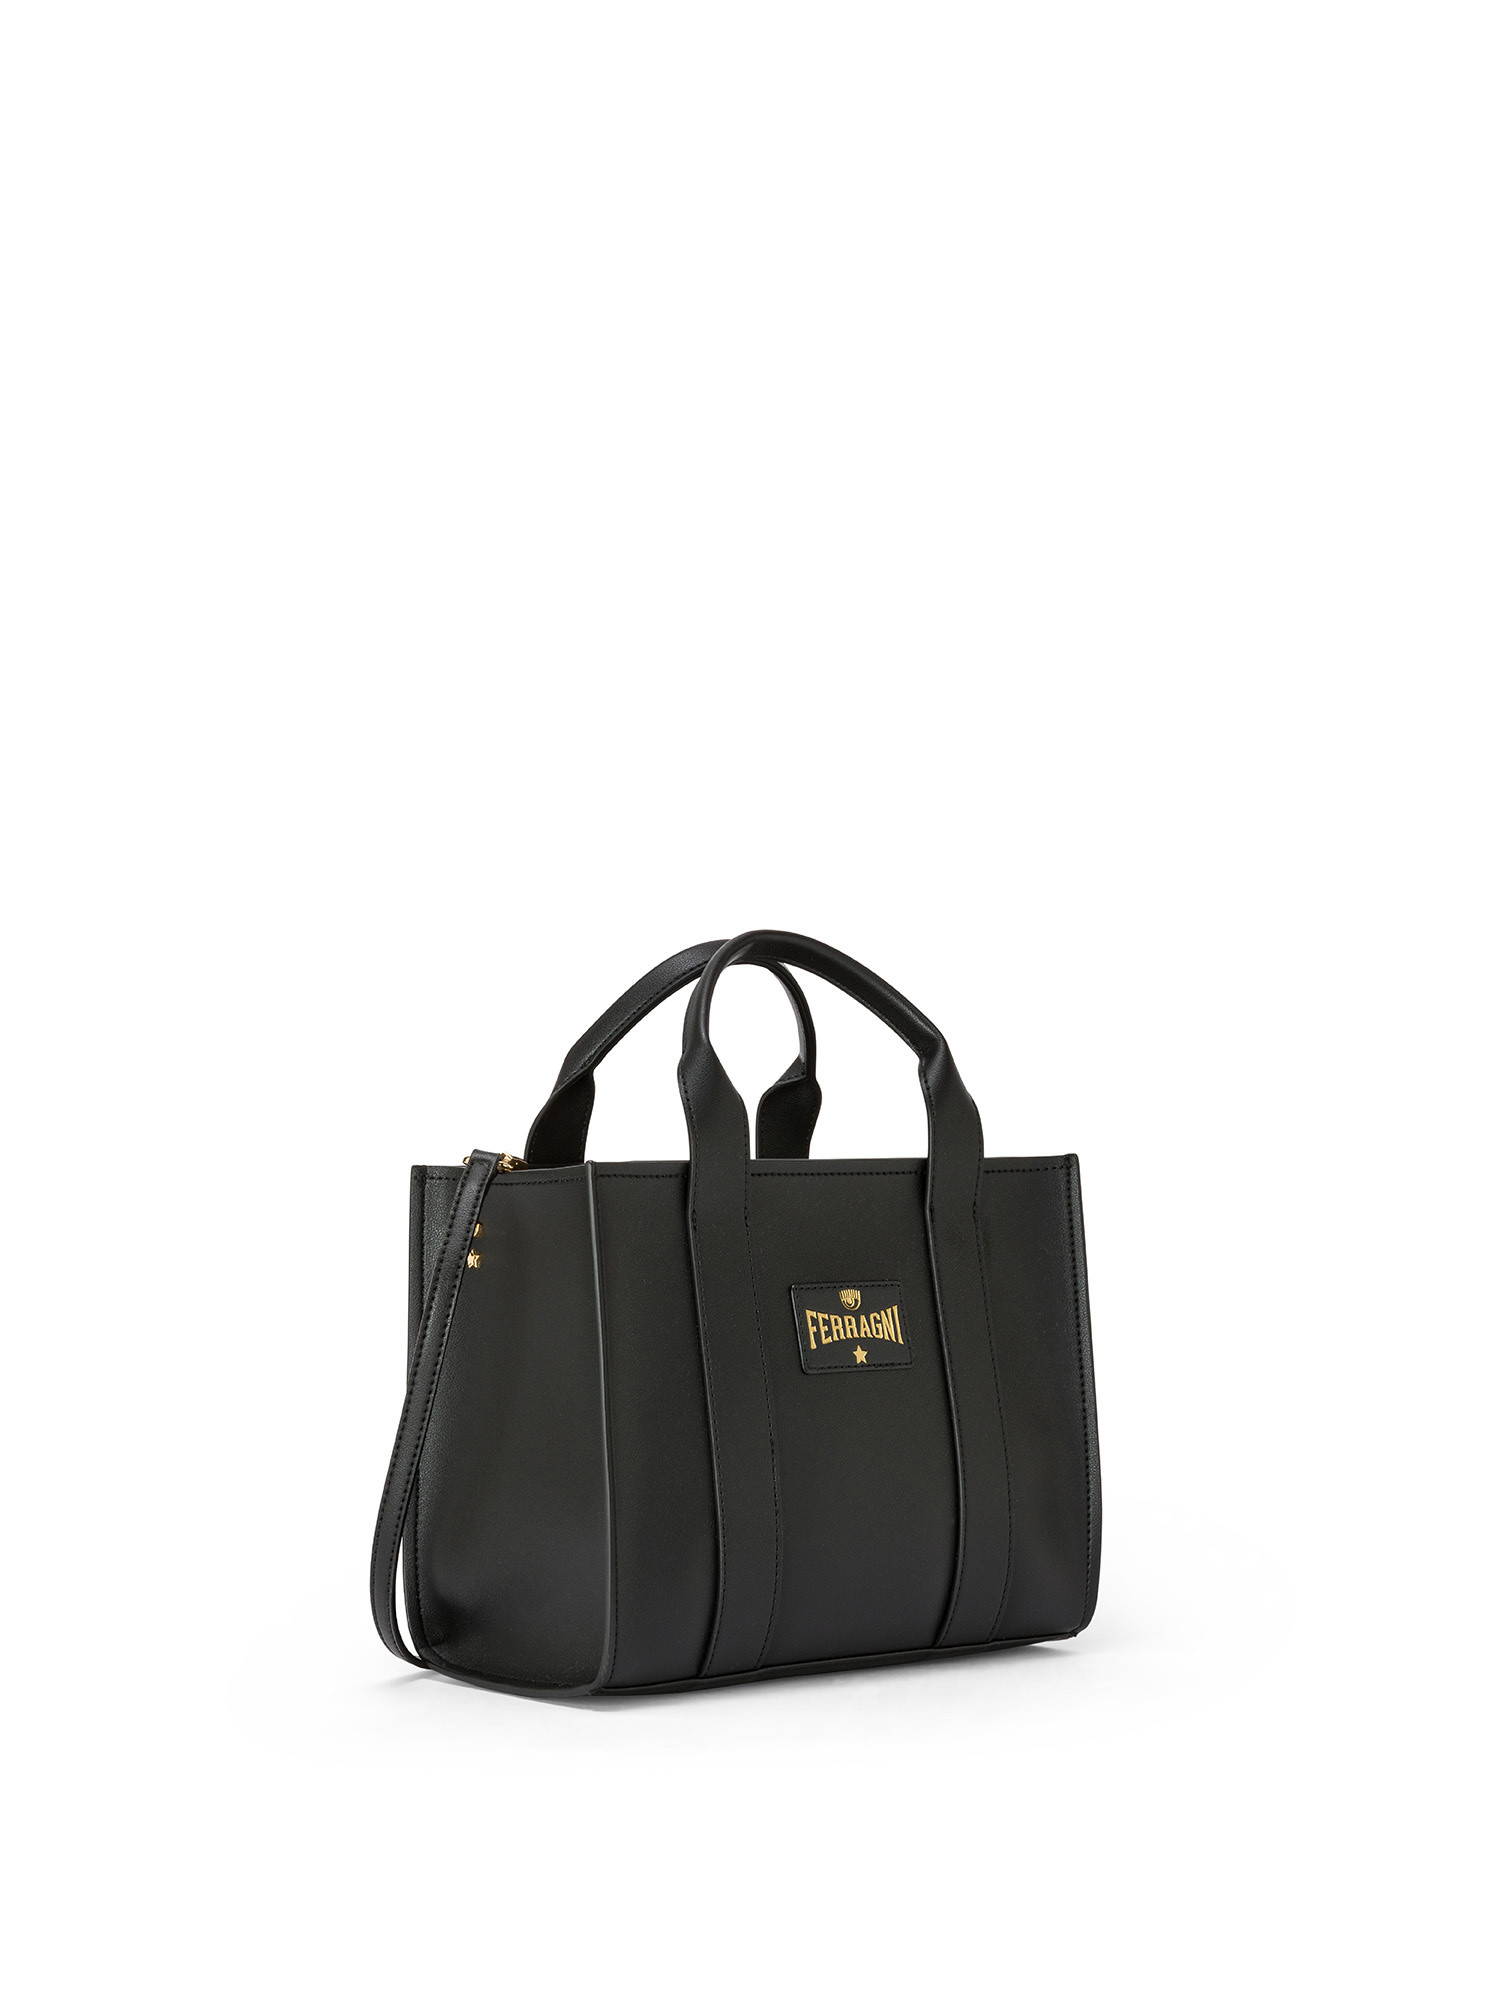 Chiara Ferragni - Range N stretch shopping bag, Black, large image number 1